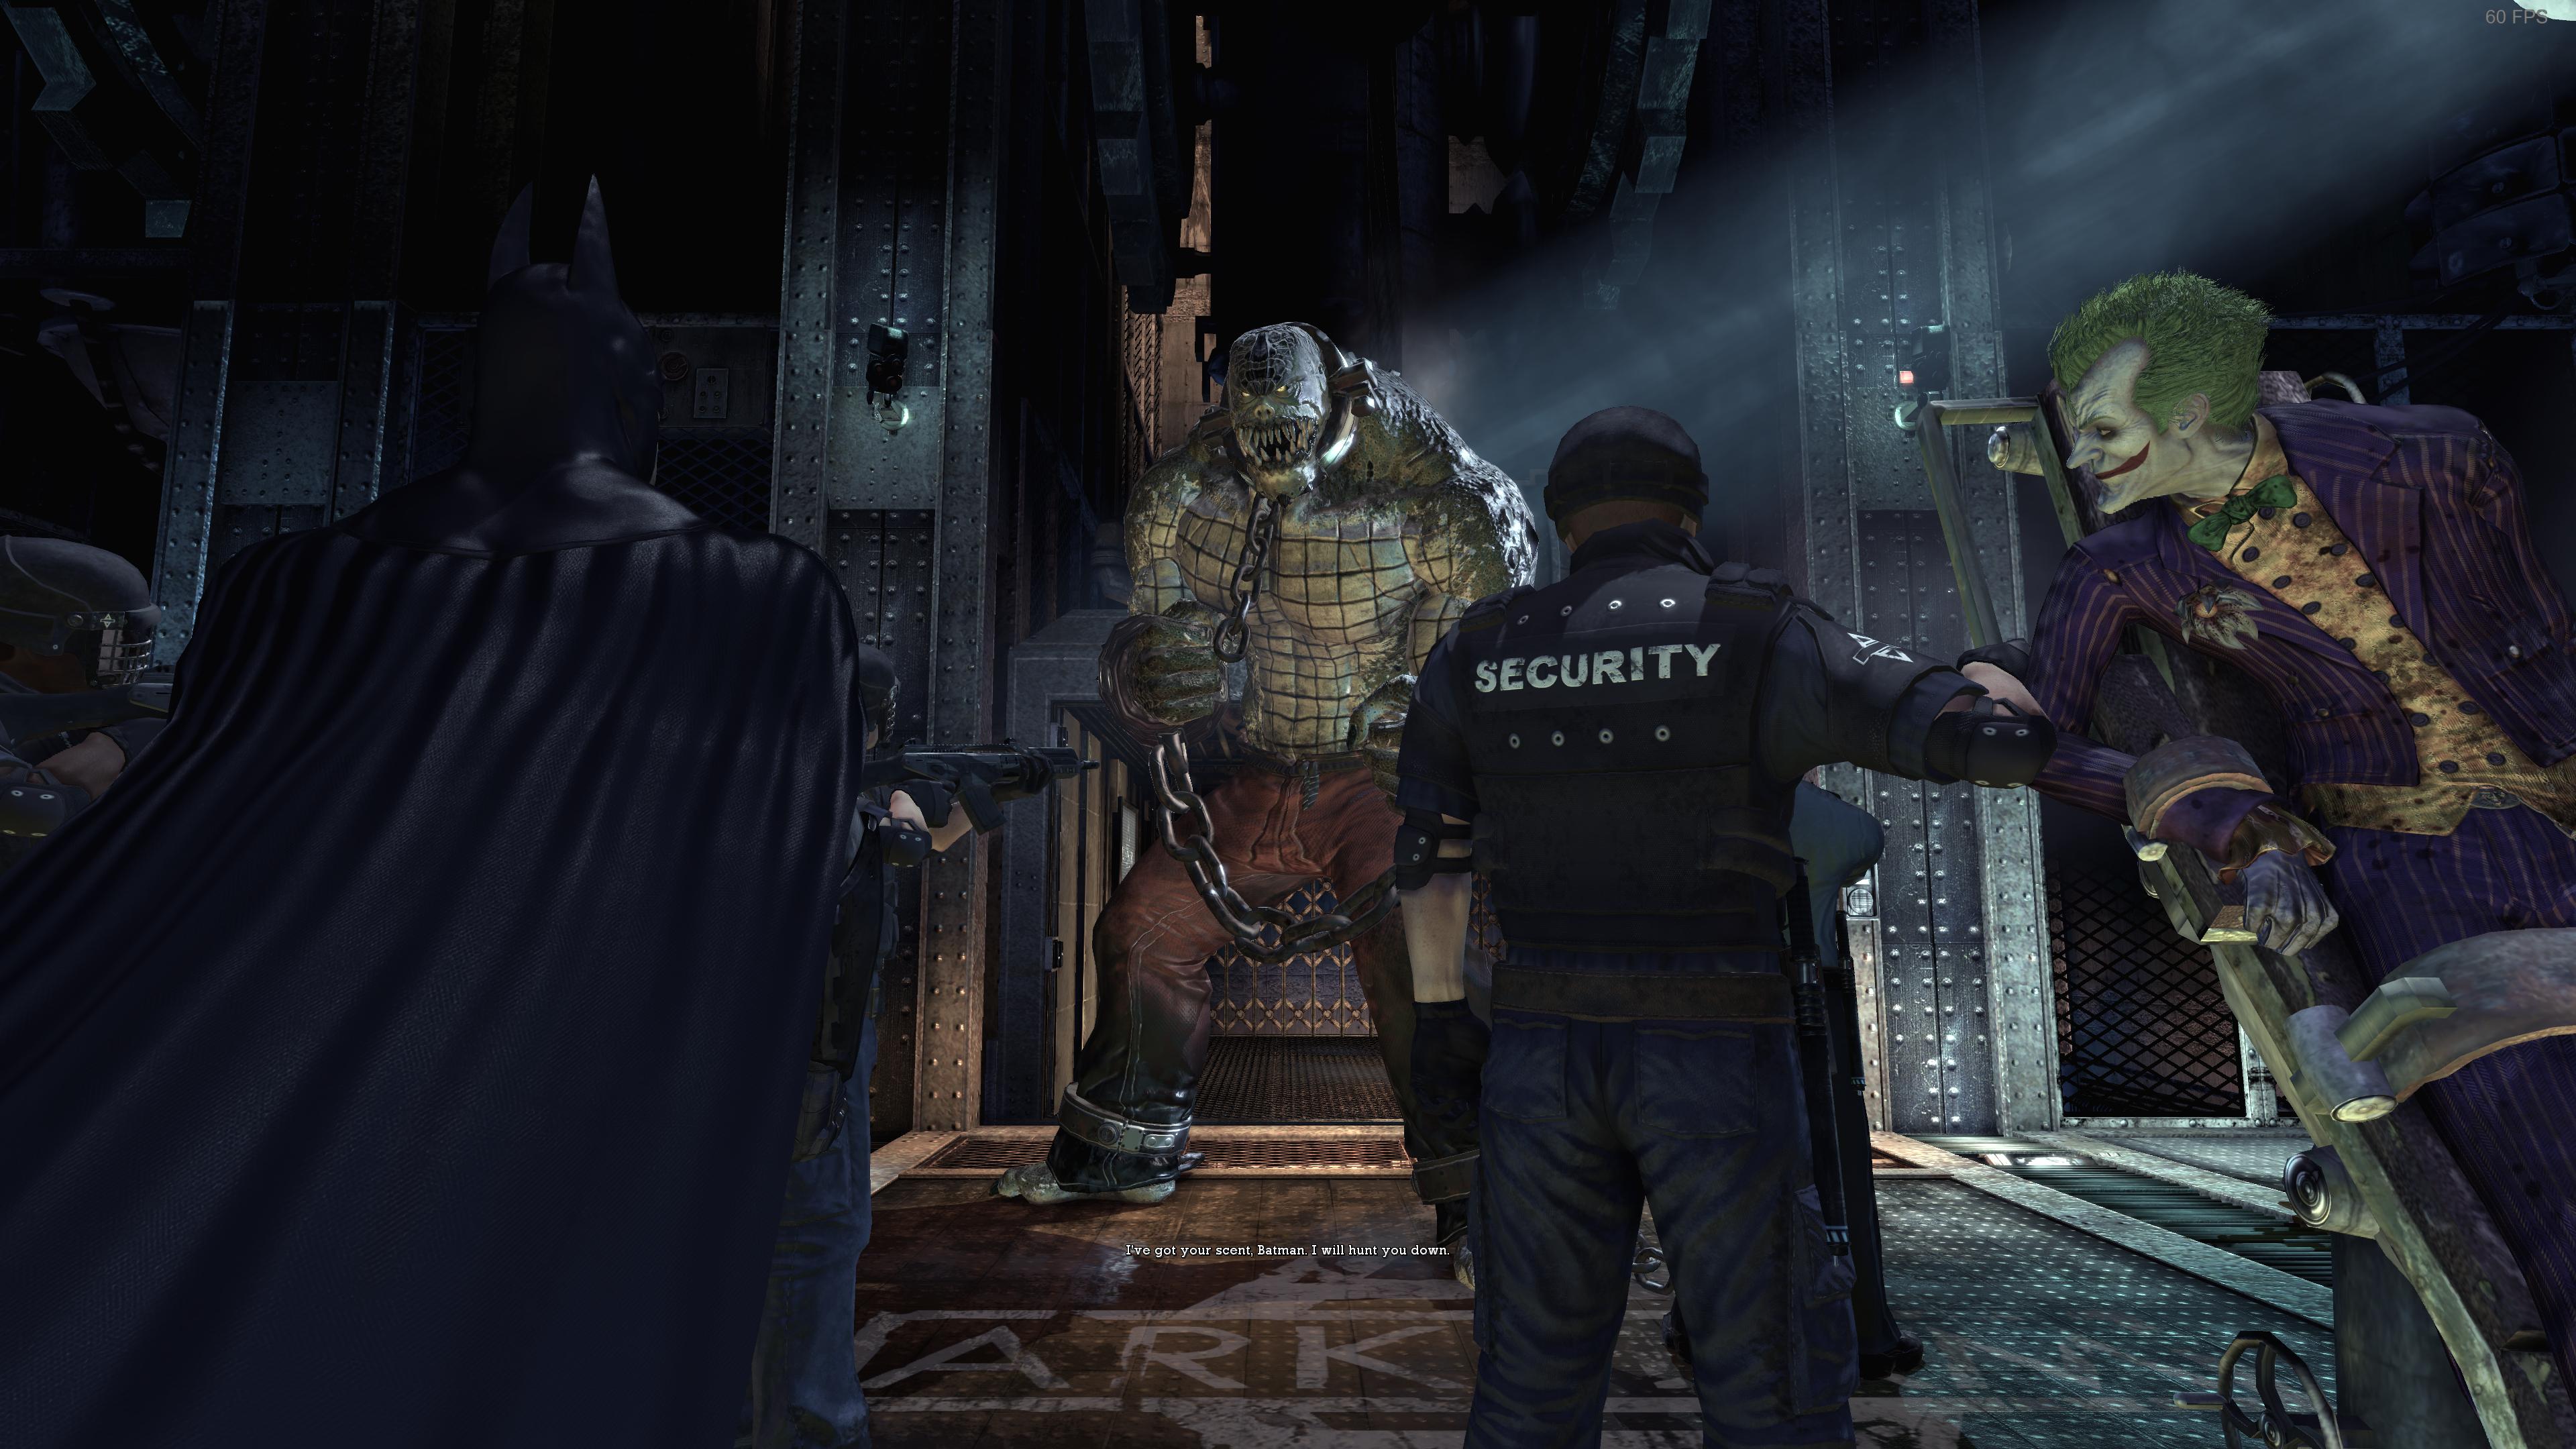 Batman Arkham Asylum Cuenta Compartida Xbox 360